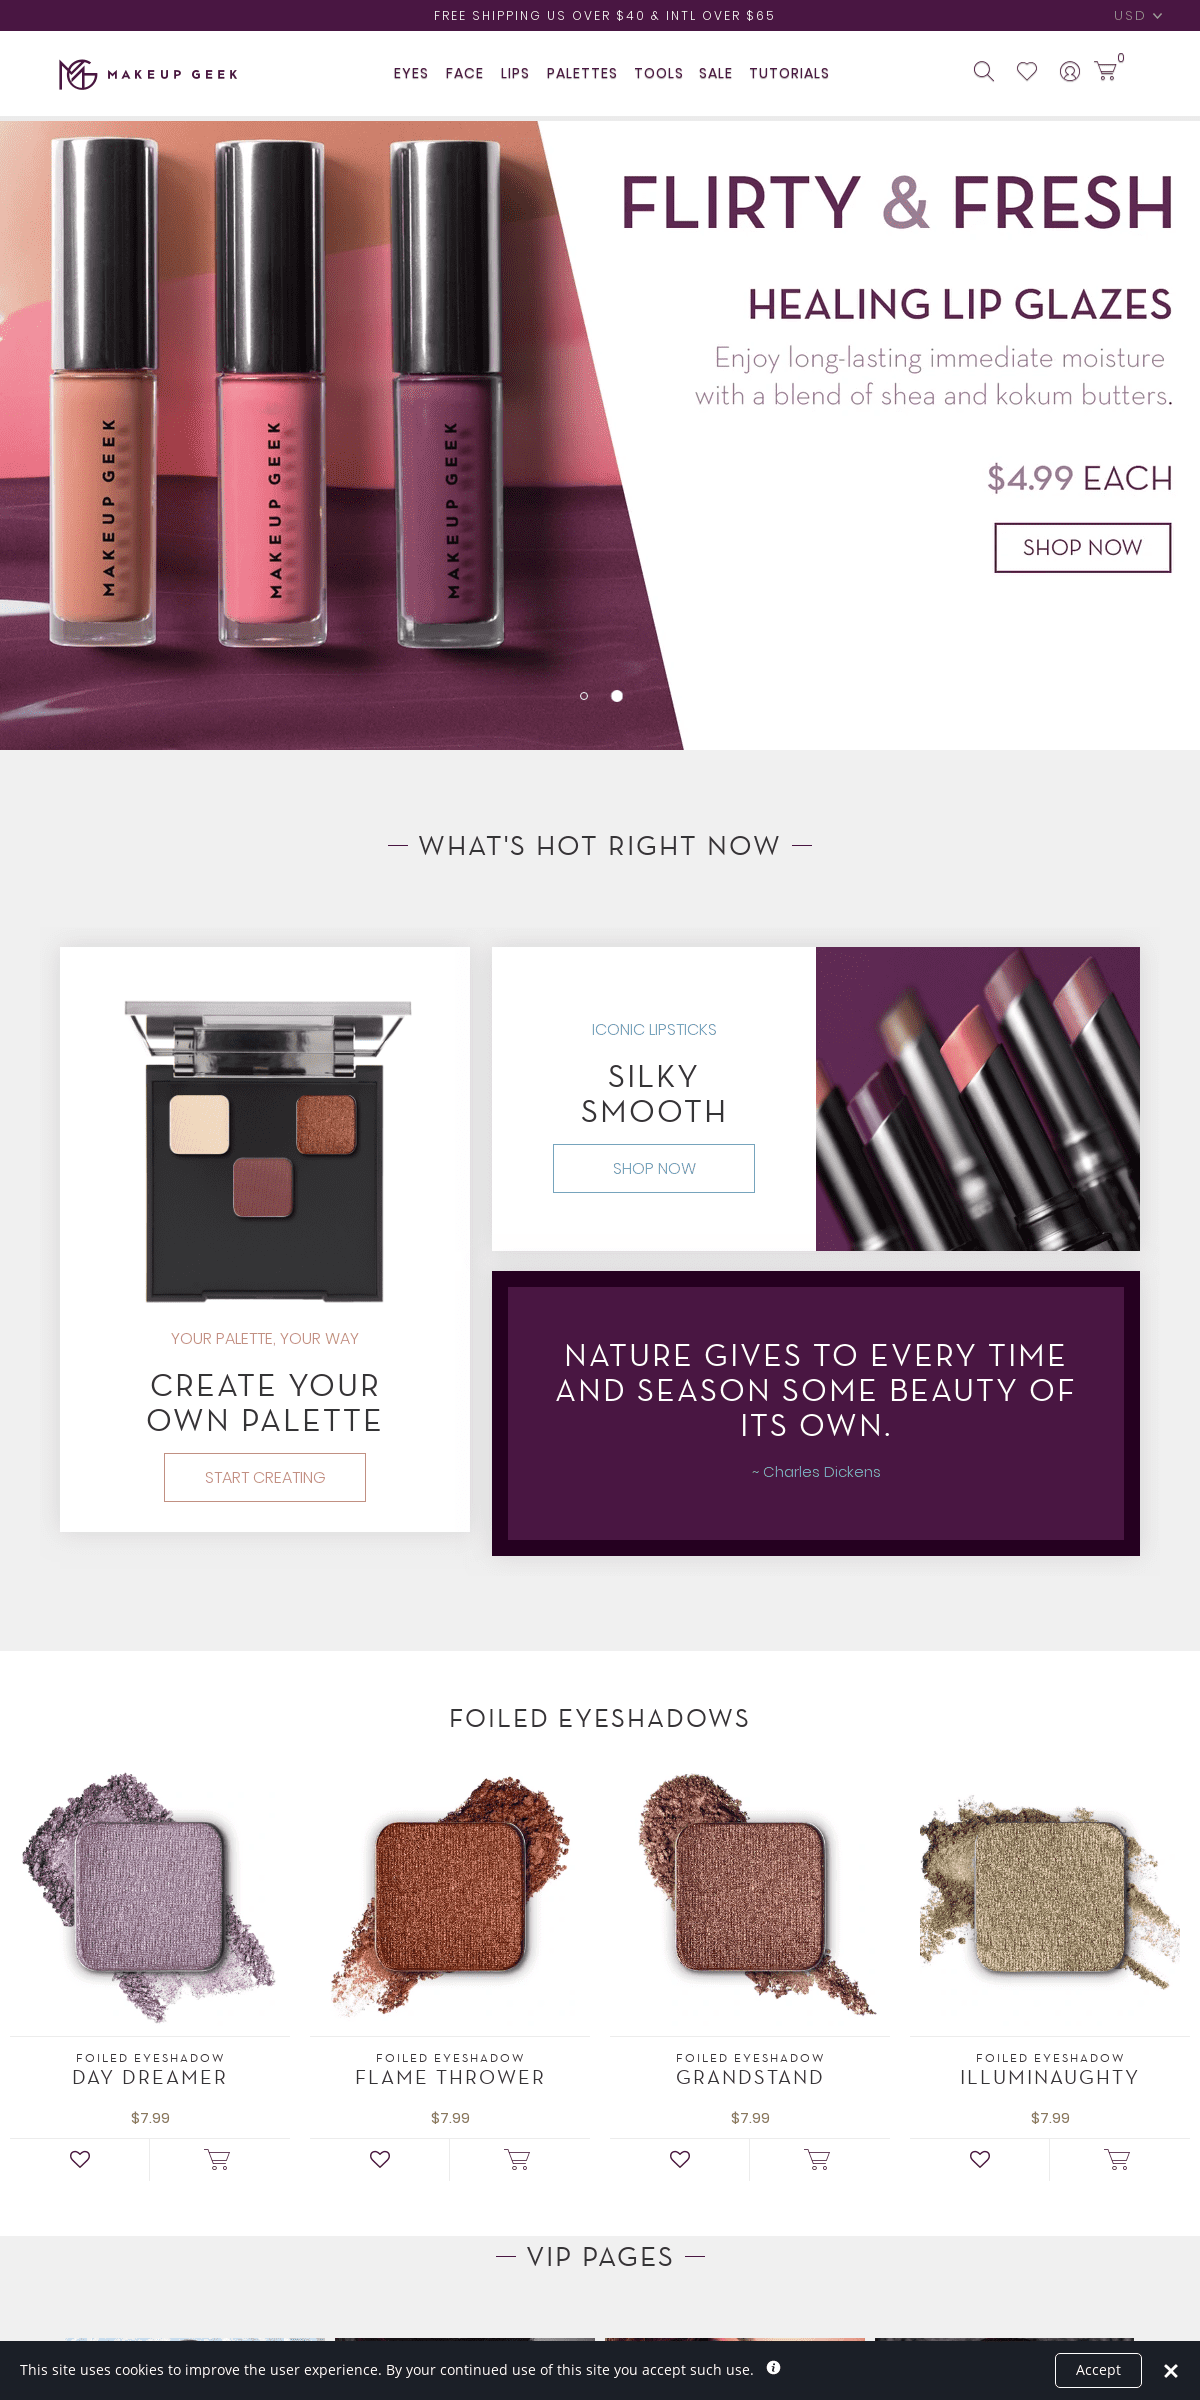 A complete backup of makeupgeek.com